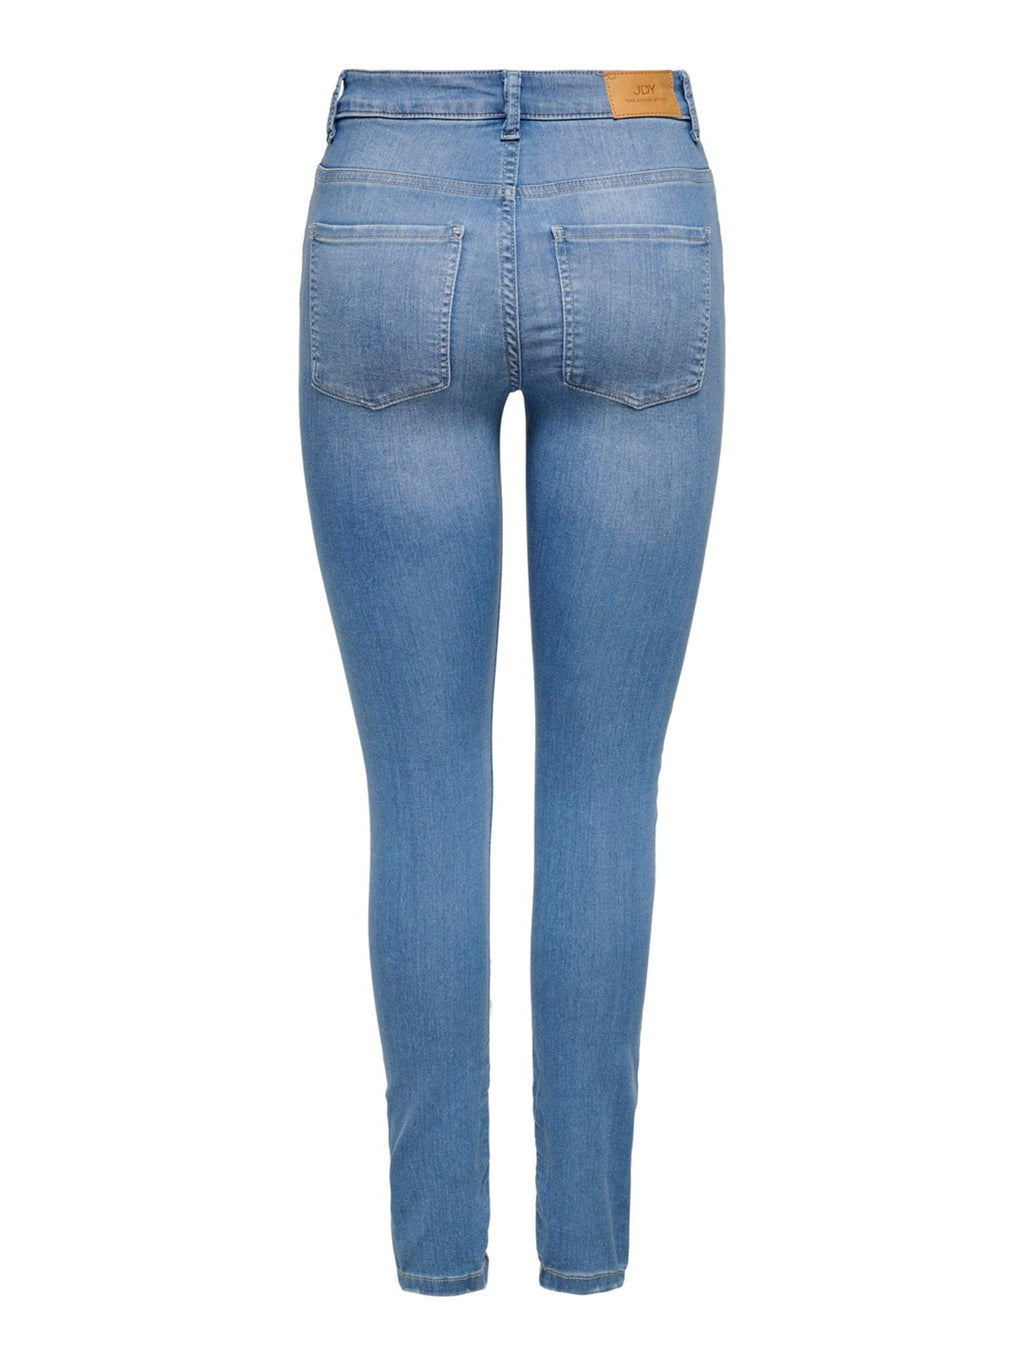 Jeans de rendimiento - Azul claro (Ventaja alta)